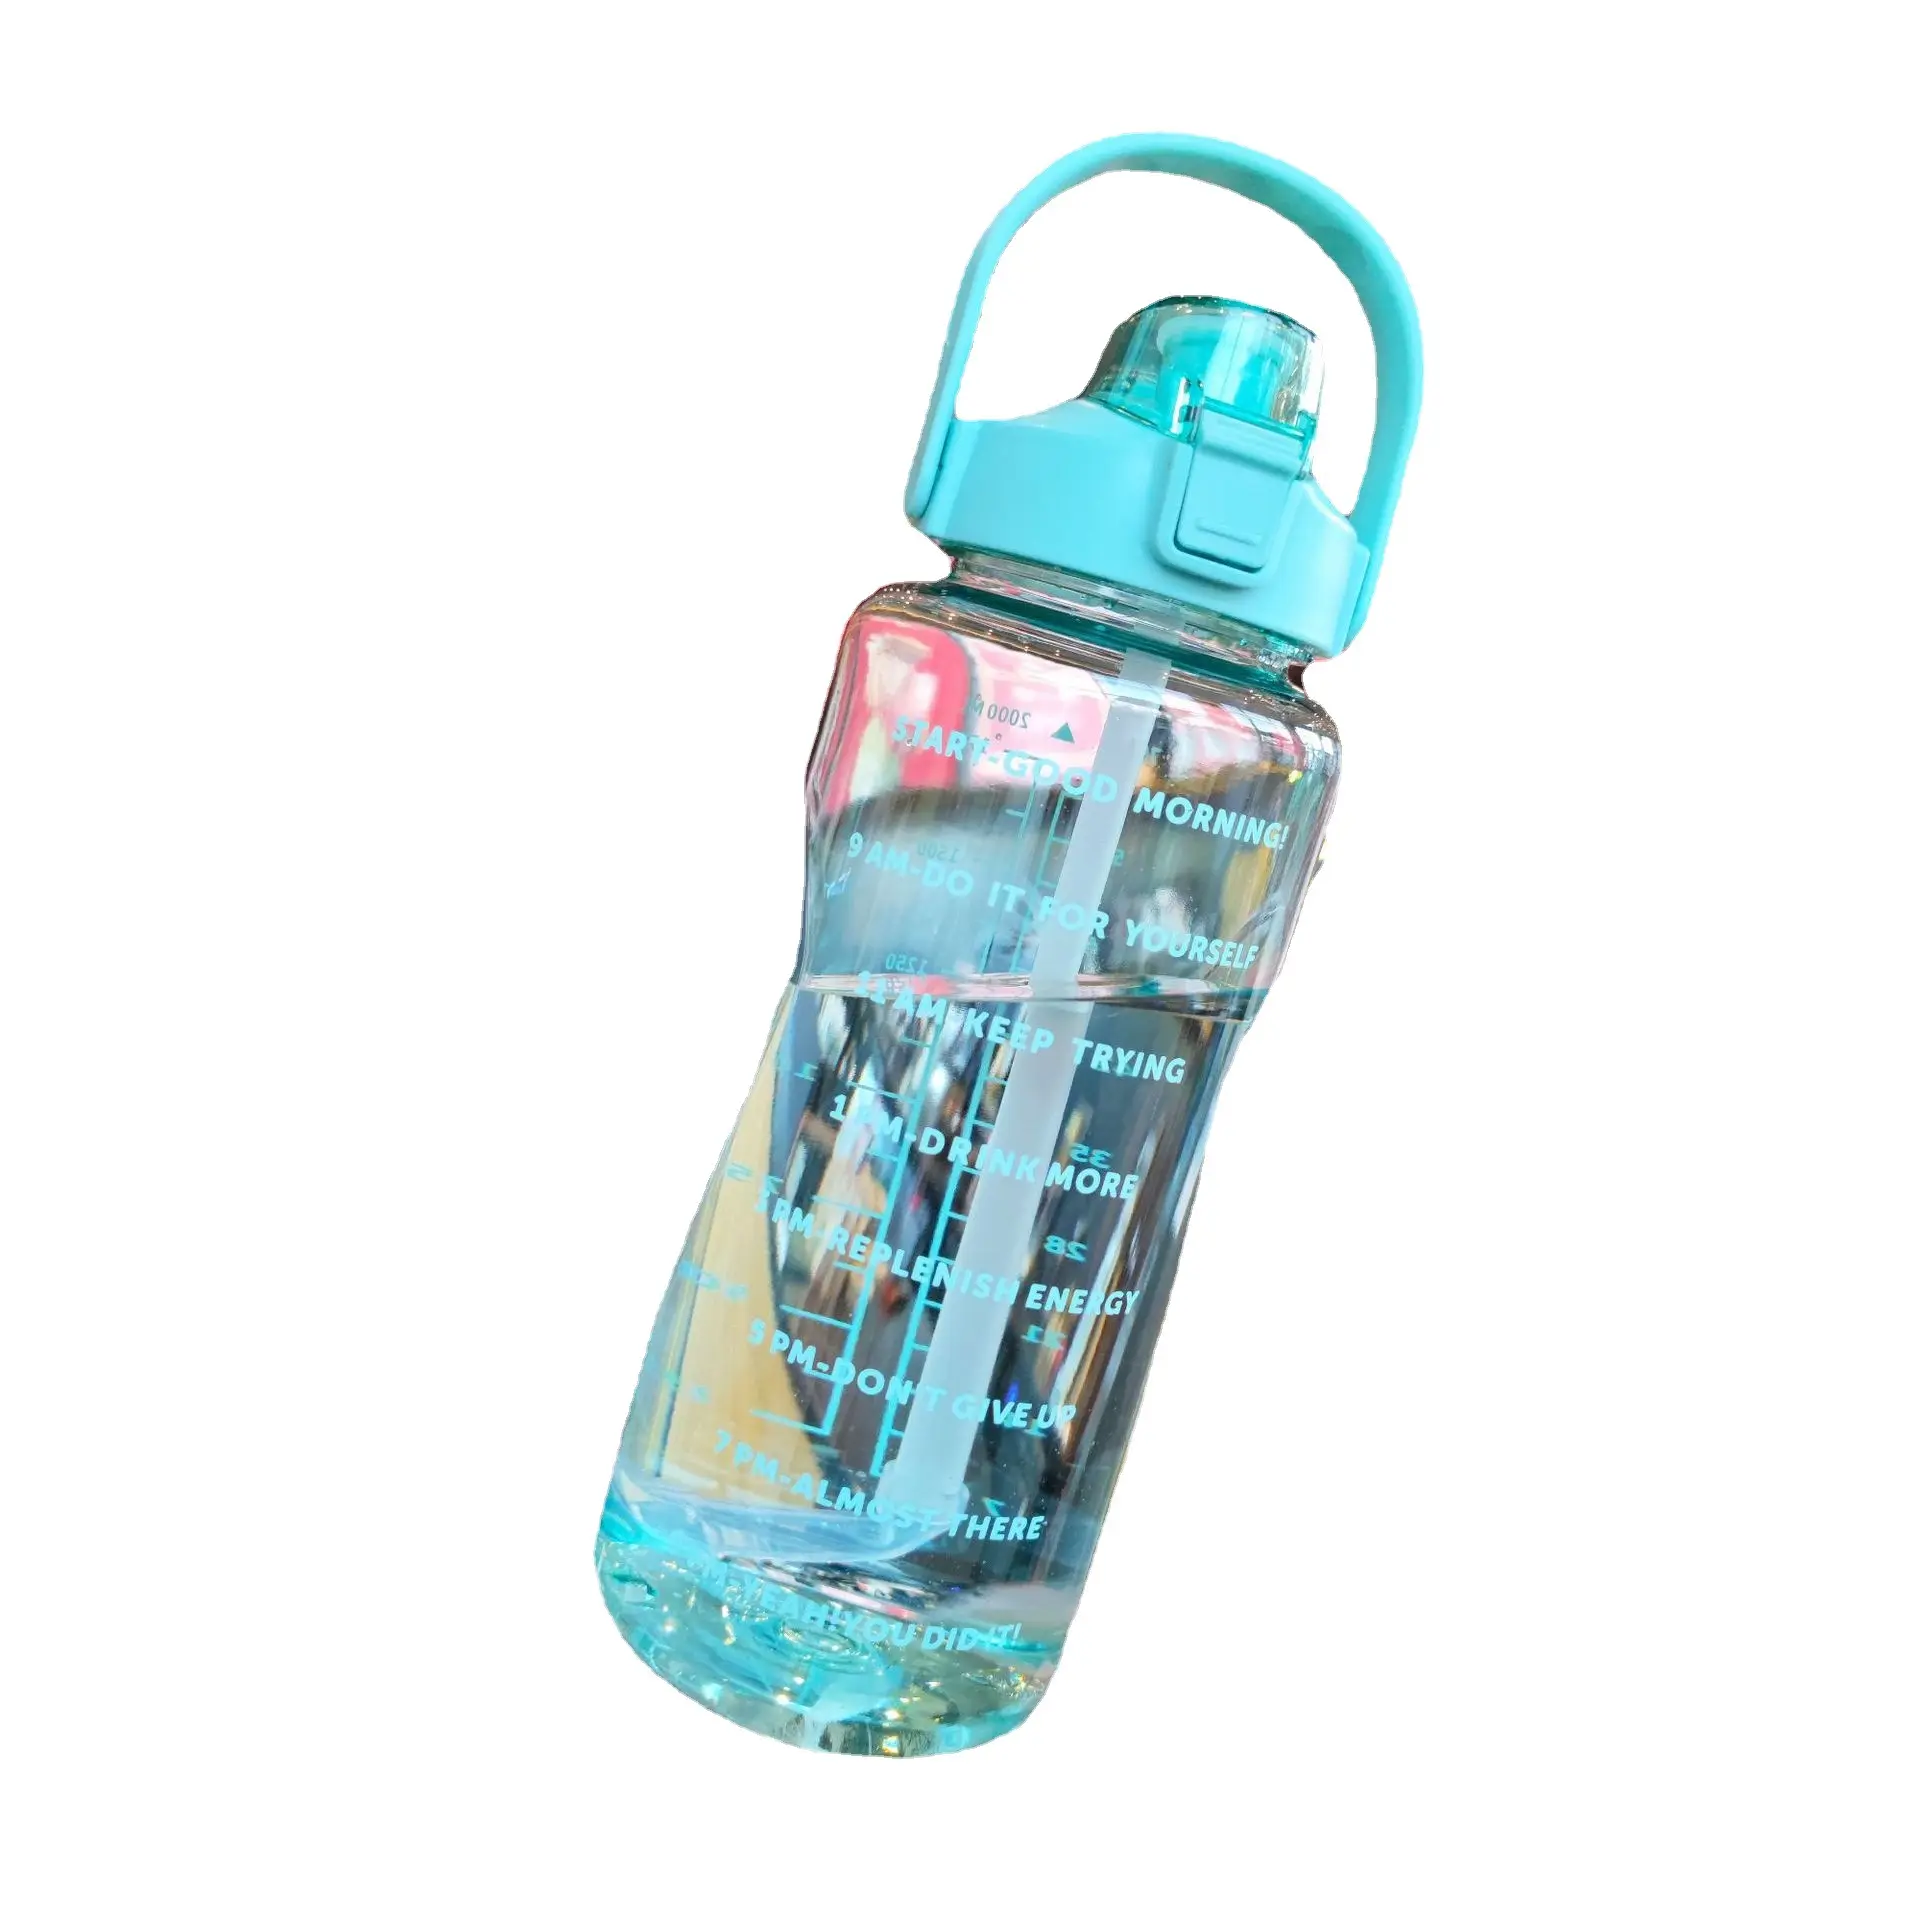 GC Commission Botella De Agua Bouteille Deau Vasos Botellas De Plastisin Botol Air Plastik Olahraga